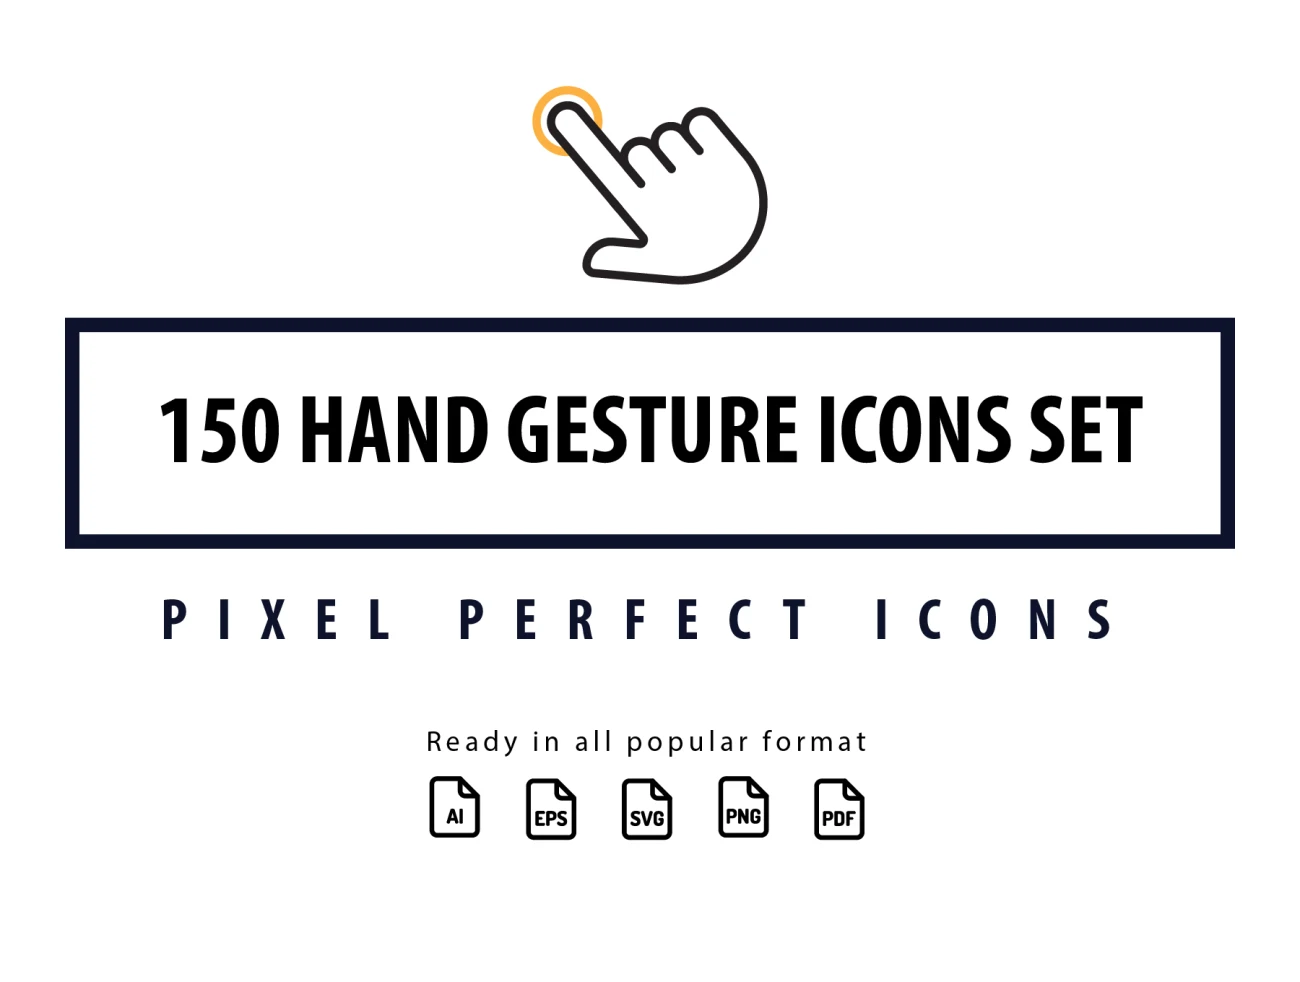 300款手势操作图标素材下载 300 Hand Gesture Icon Set .svg .png .jpeg插图1